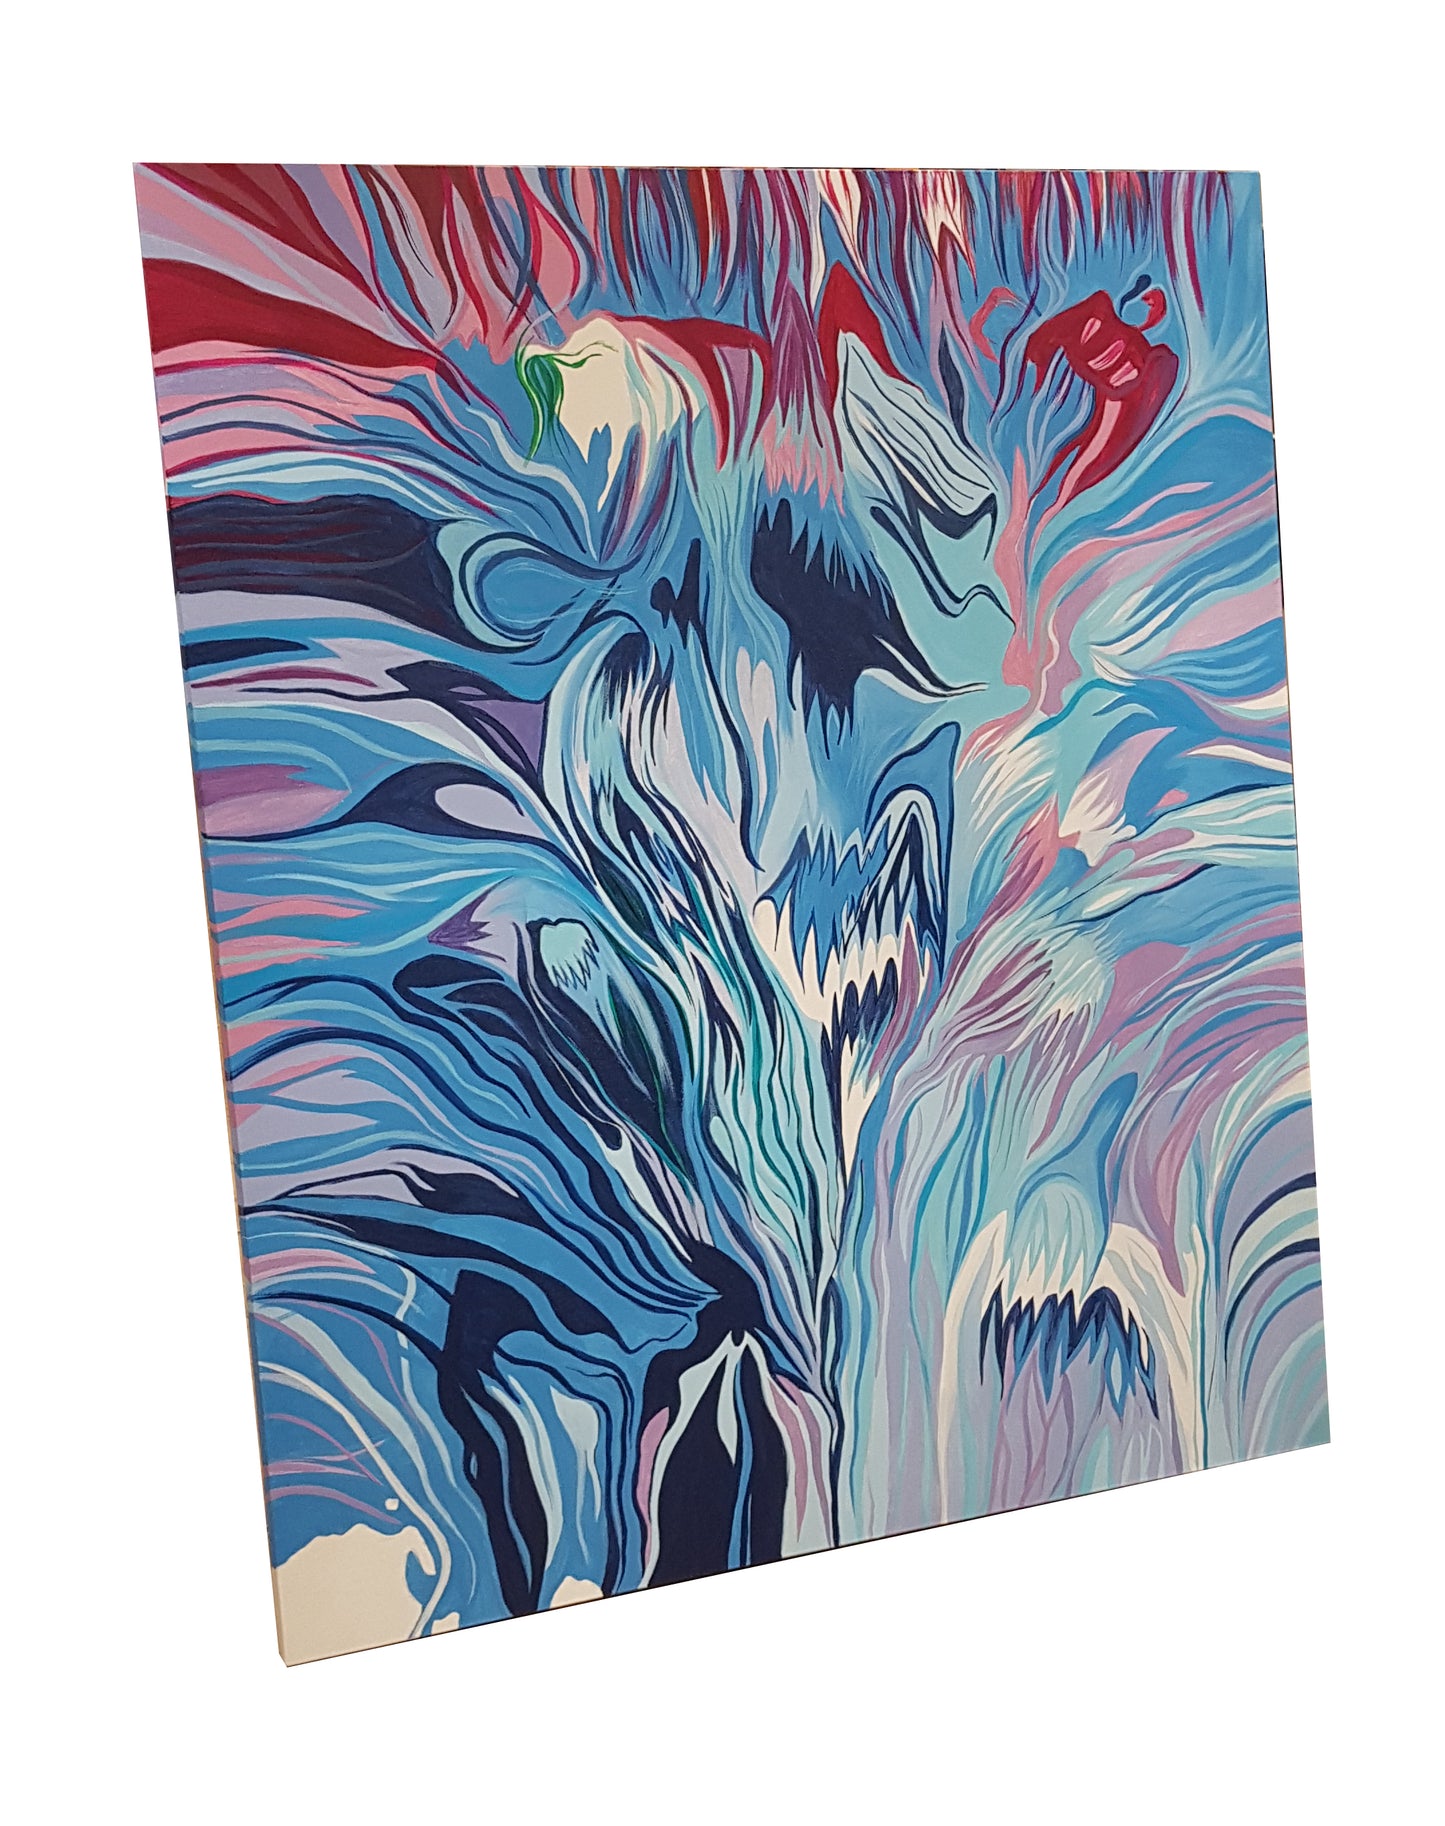 Blue-Venom-Alexandra-Romano-Art-Large-Abstract-Statement-Piece-Paintings-for-Sale-Buy-Unique-Decor